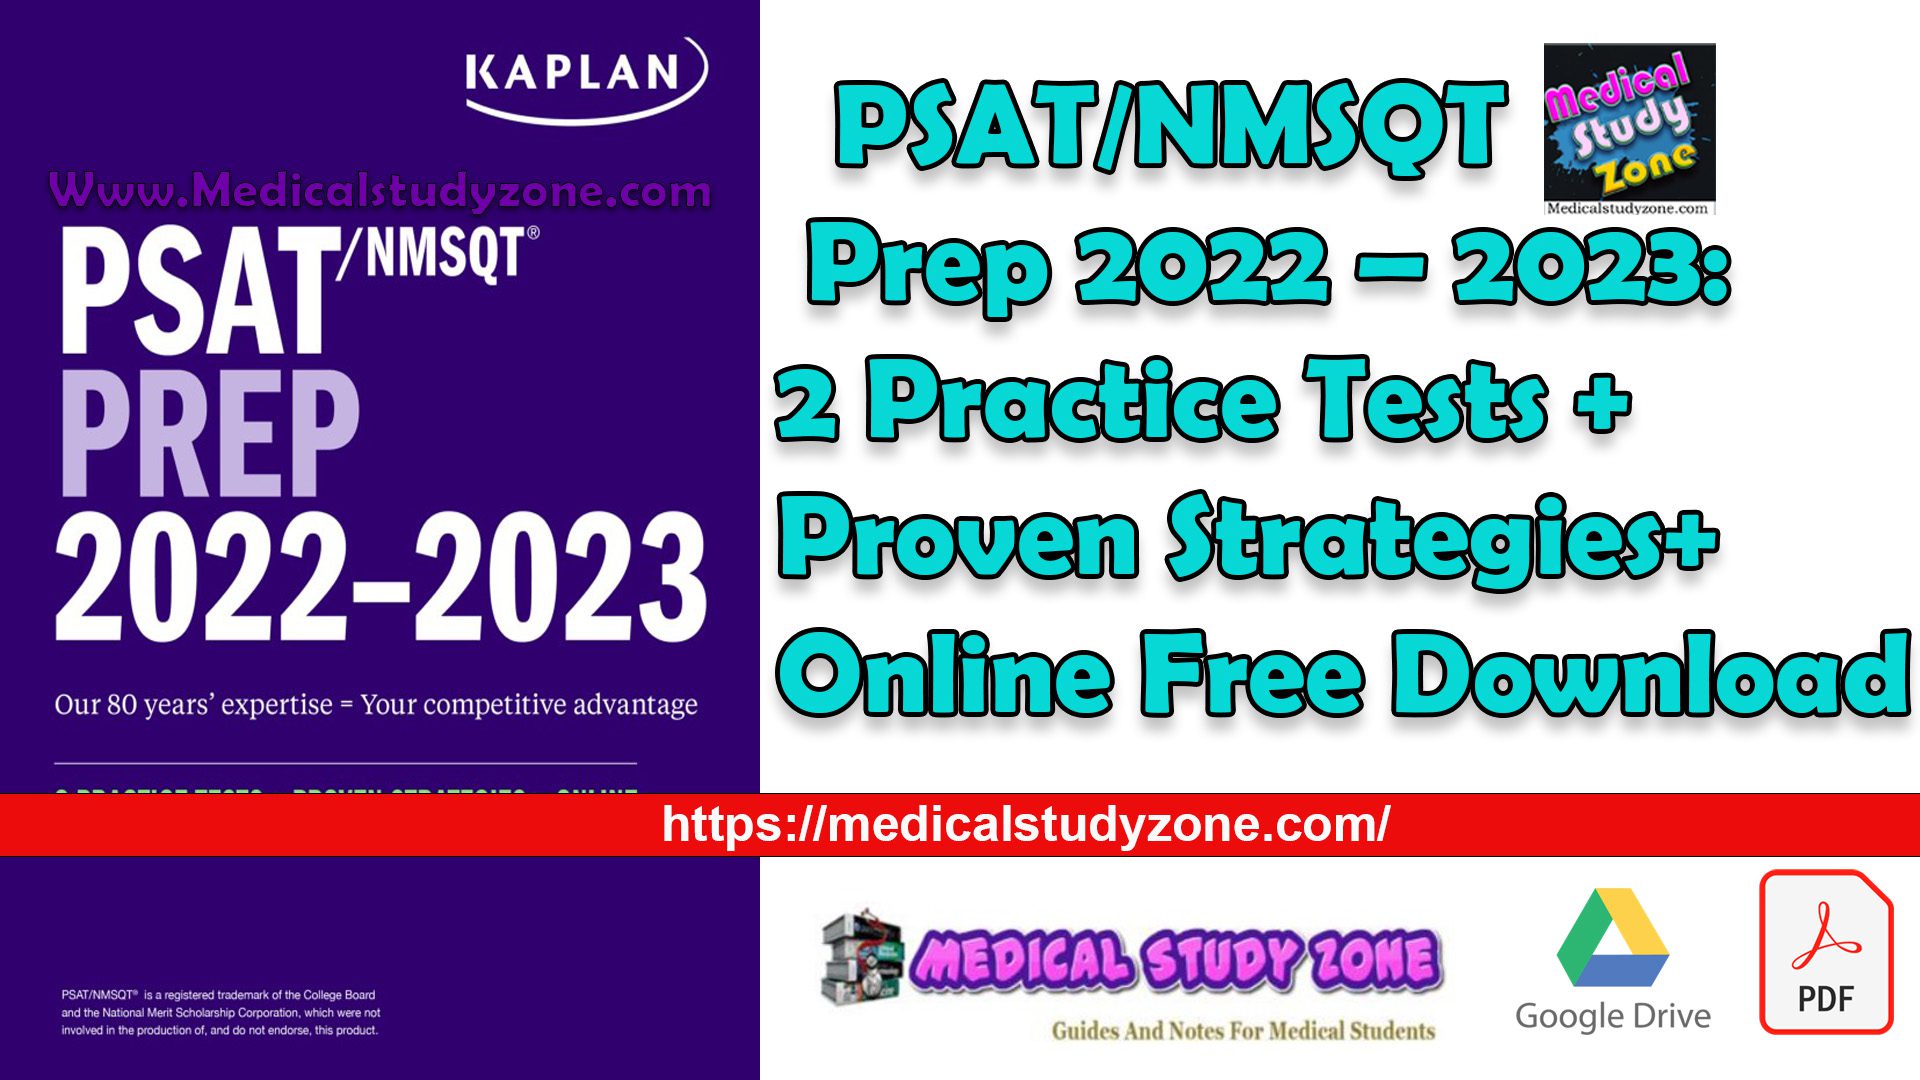 PSAT/NMSQT Prep 2022 – 2023: 2 Practice Tests + Proven Strategies + Online Free Download